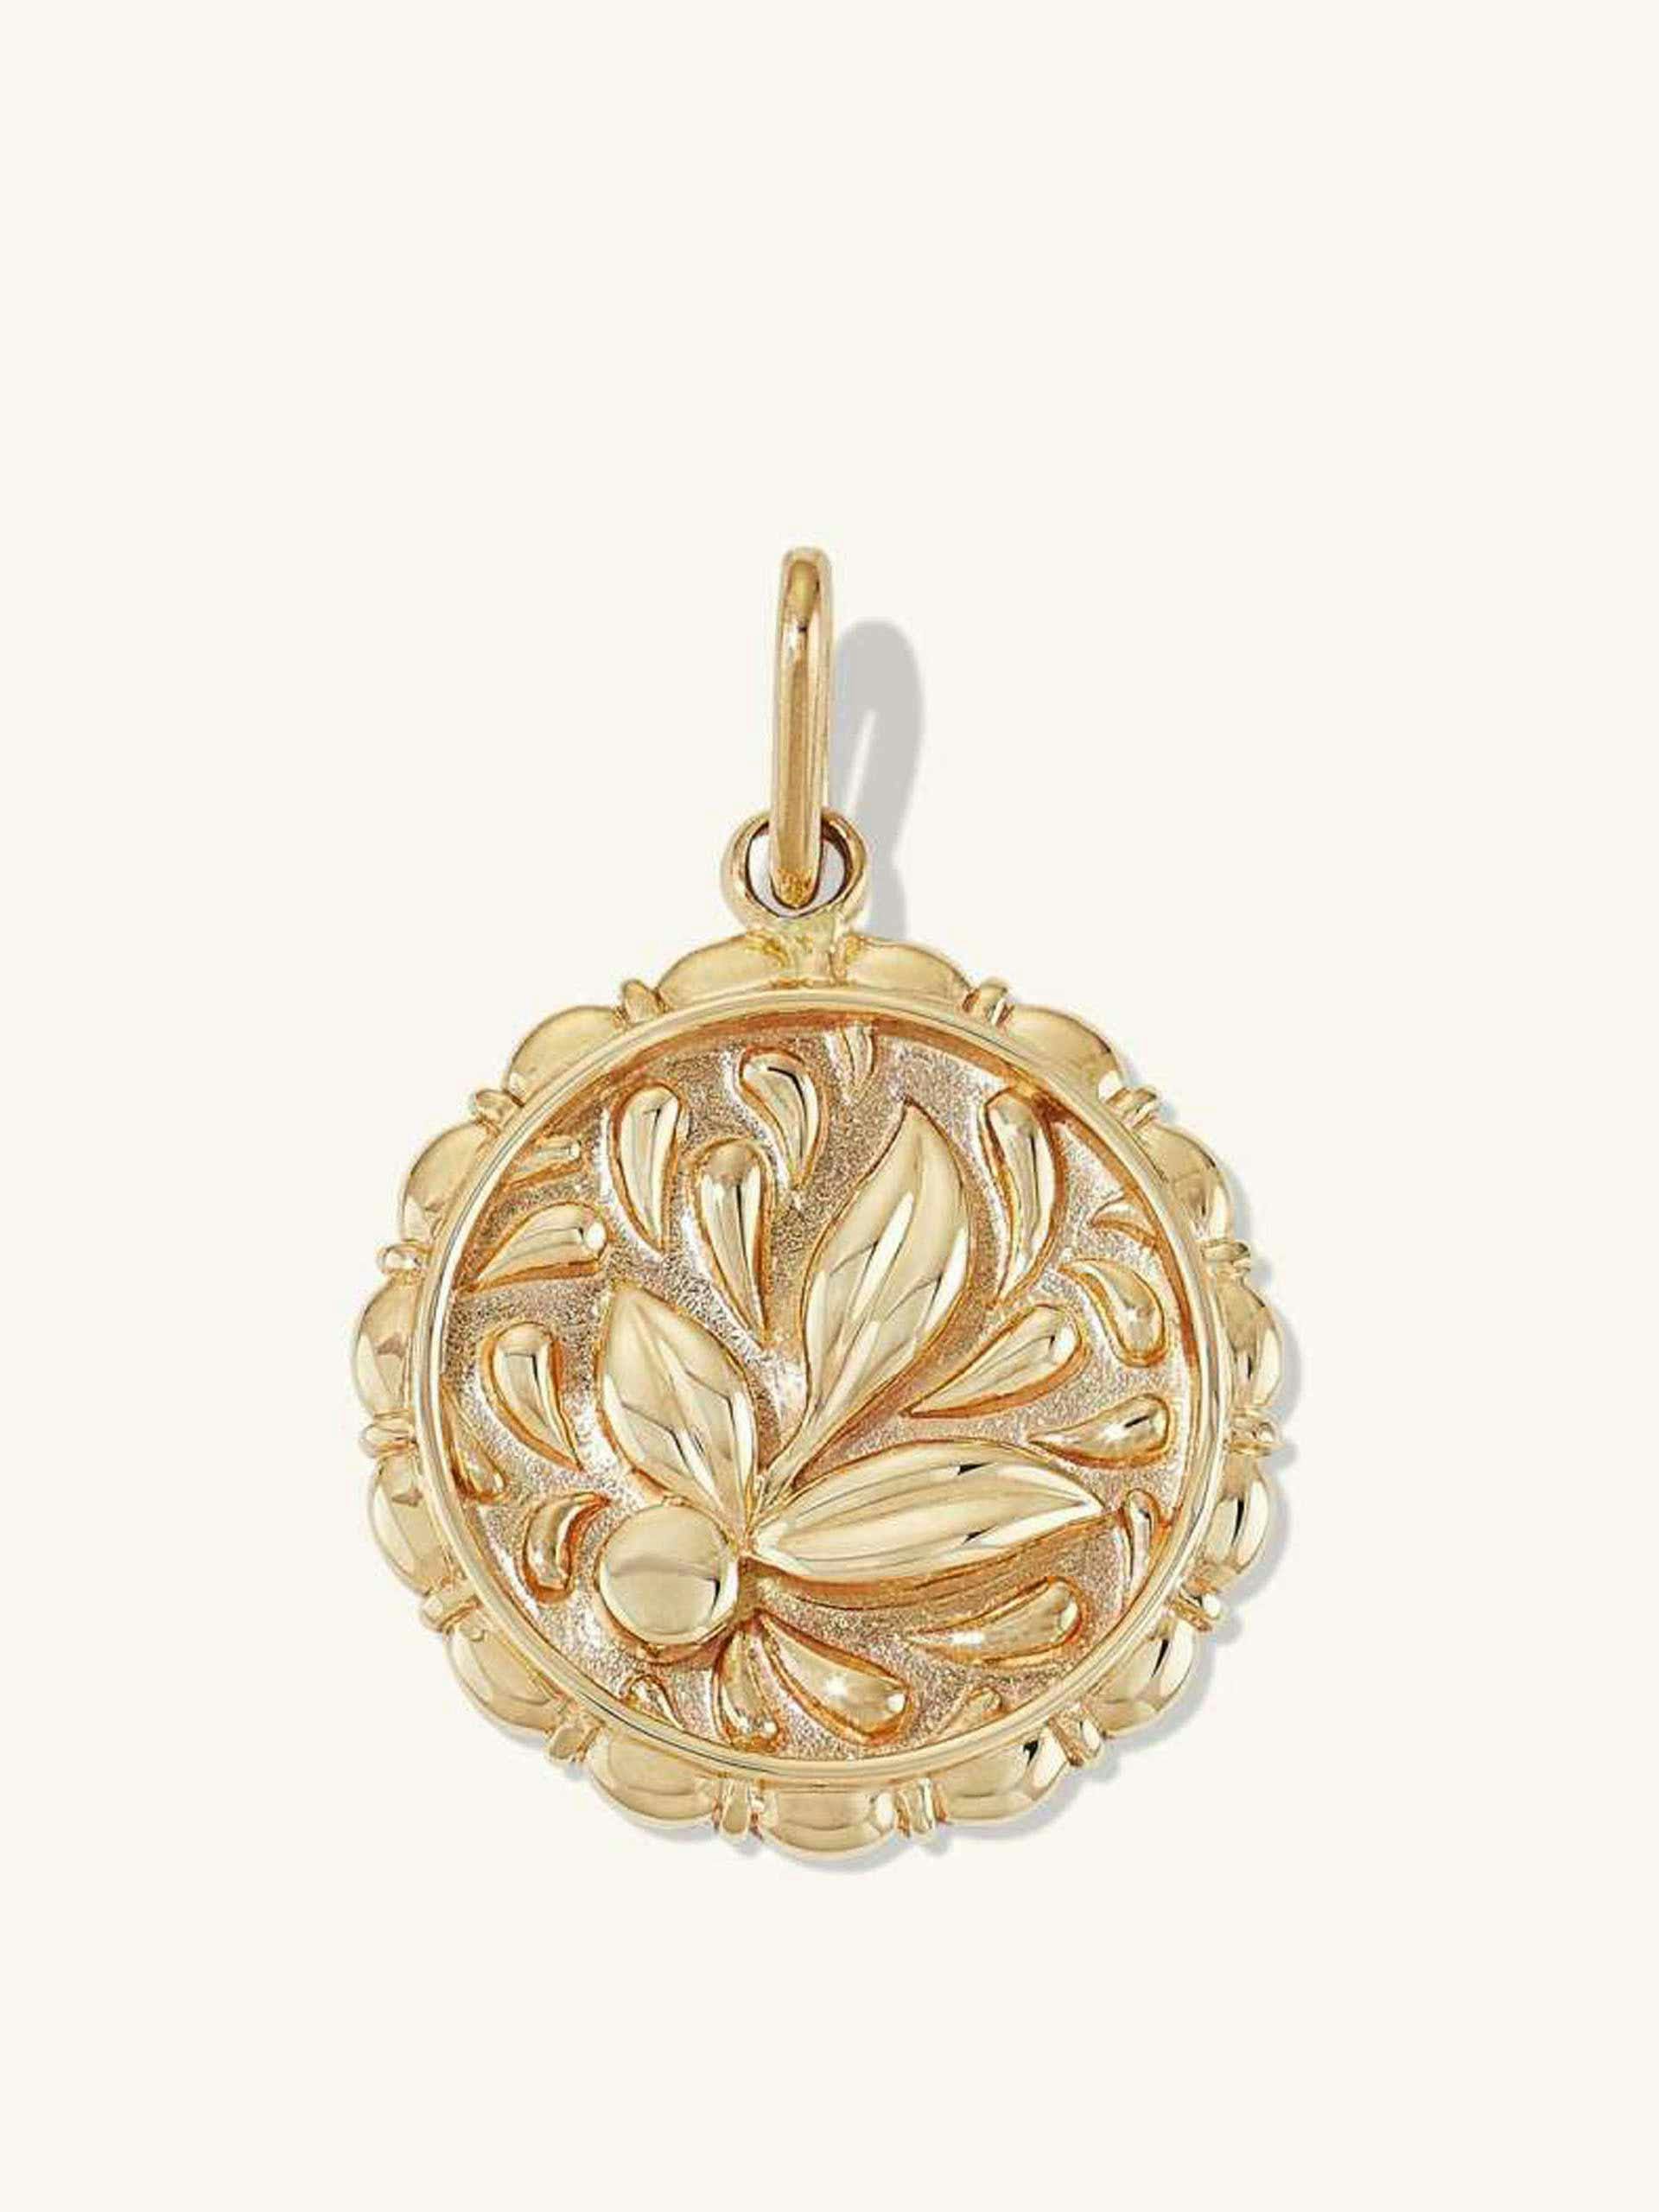 14kt yellow gold charm pendant